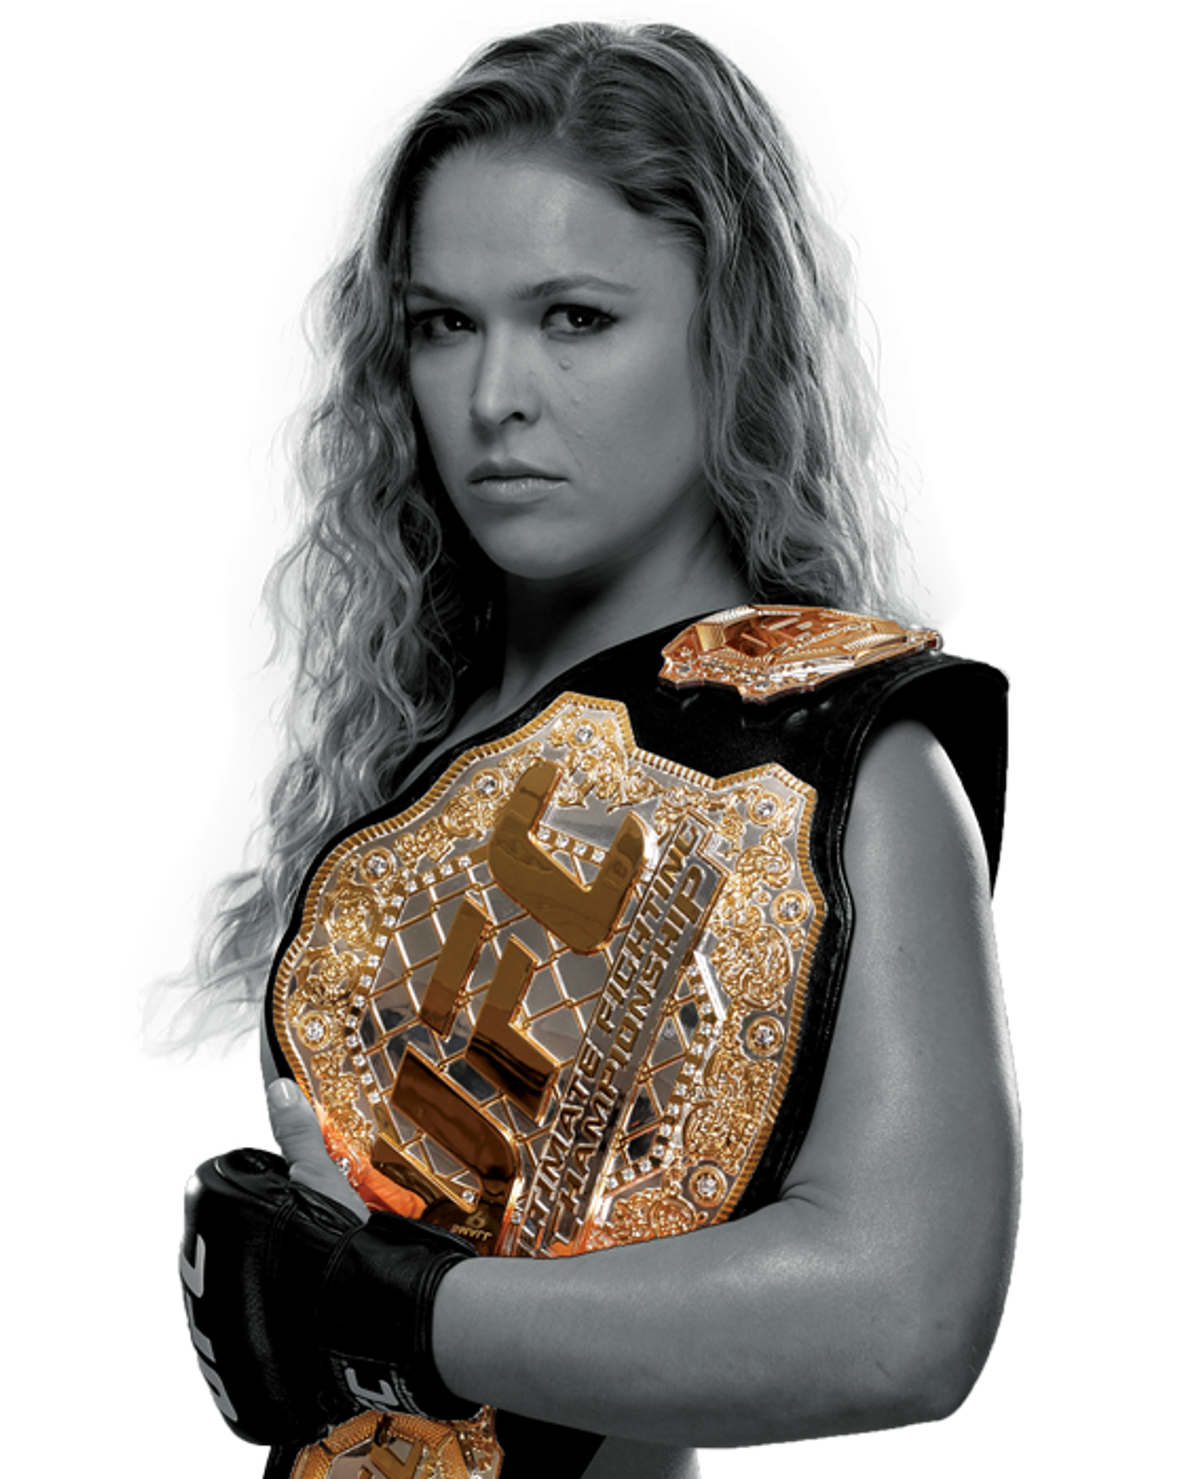 "Rowdy" Ronda Rousey